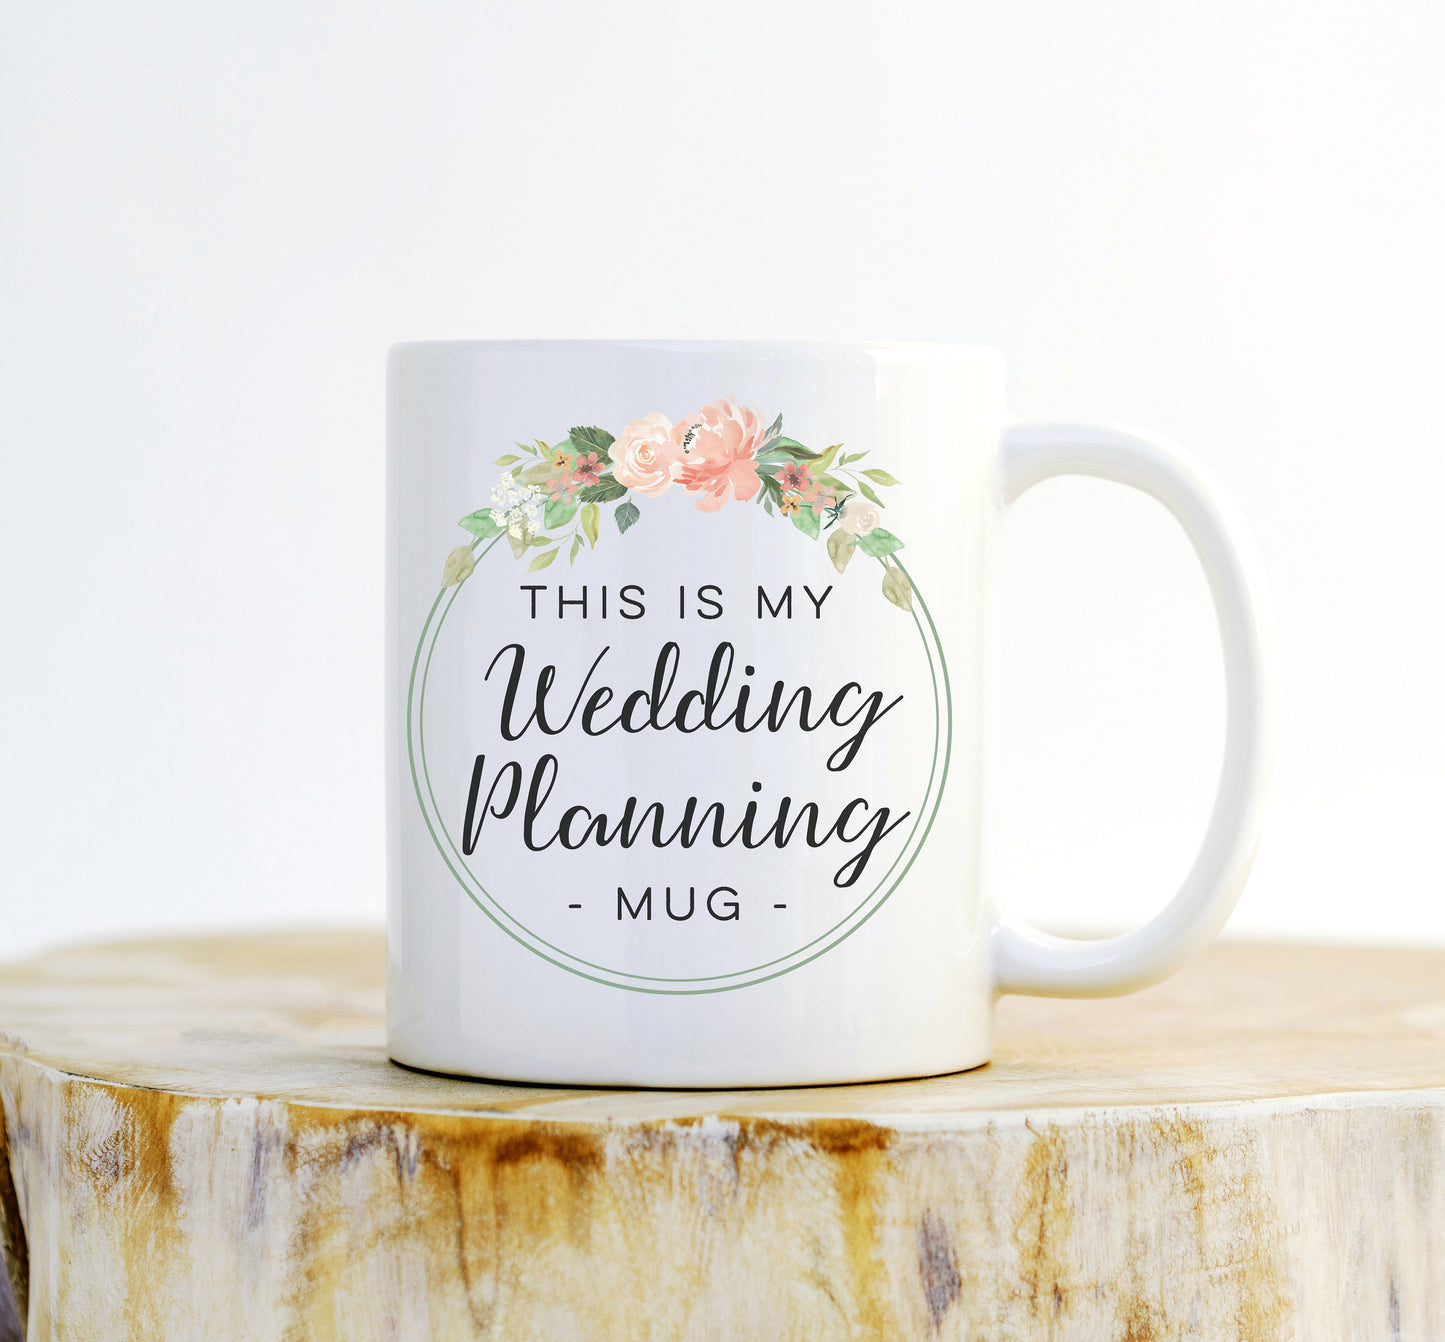 This Is My Wedding Planning Mug  - Bride To Be Mug, Wedding Mug, Engagement Gift, Bridal Shower, Gift For Bride, Bride Gift, Engagement Mug